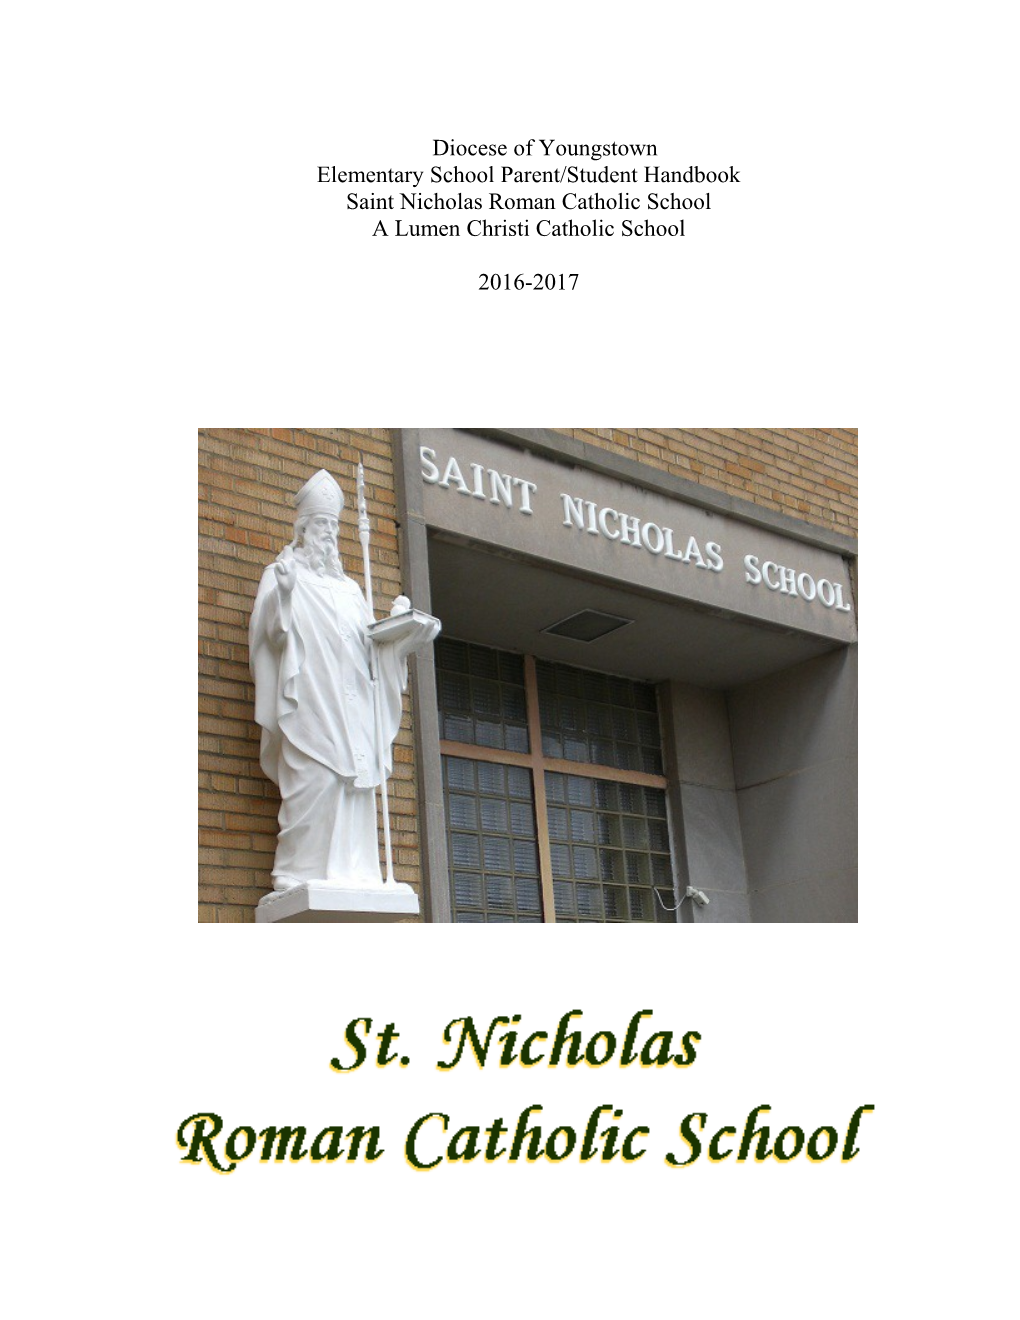 Saint Nicholas Roman Catholic School